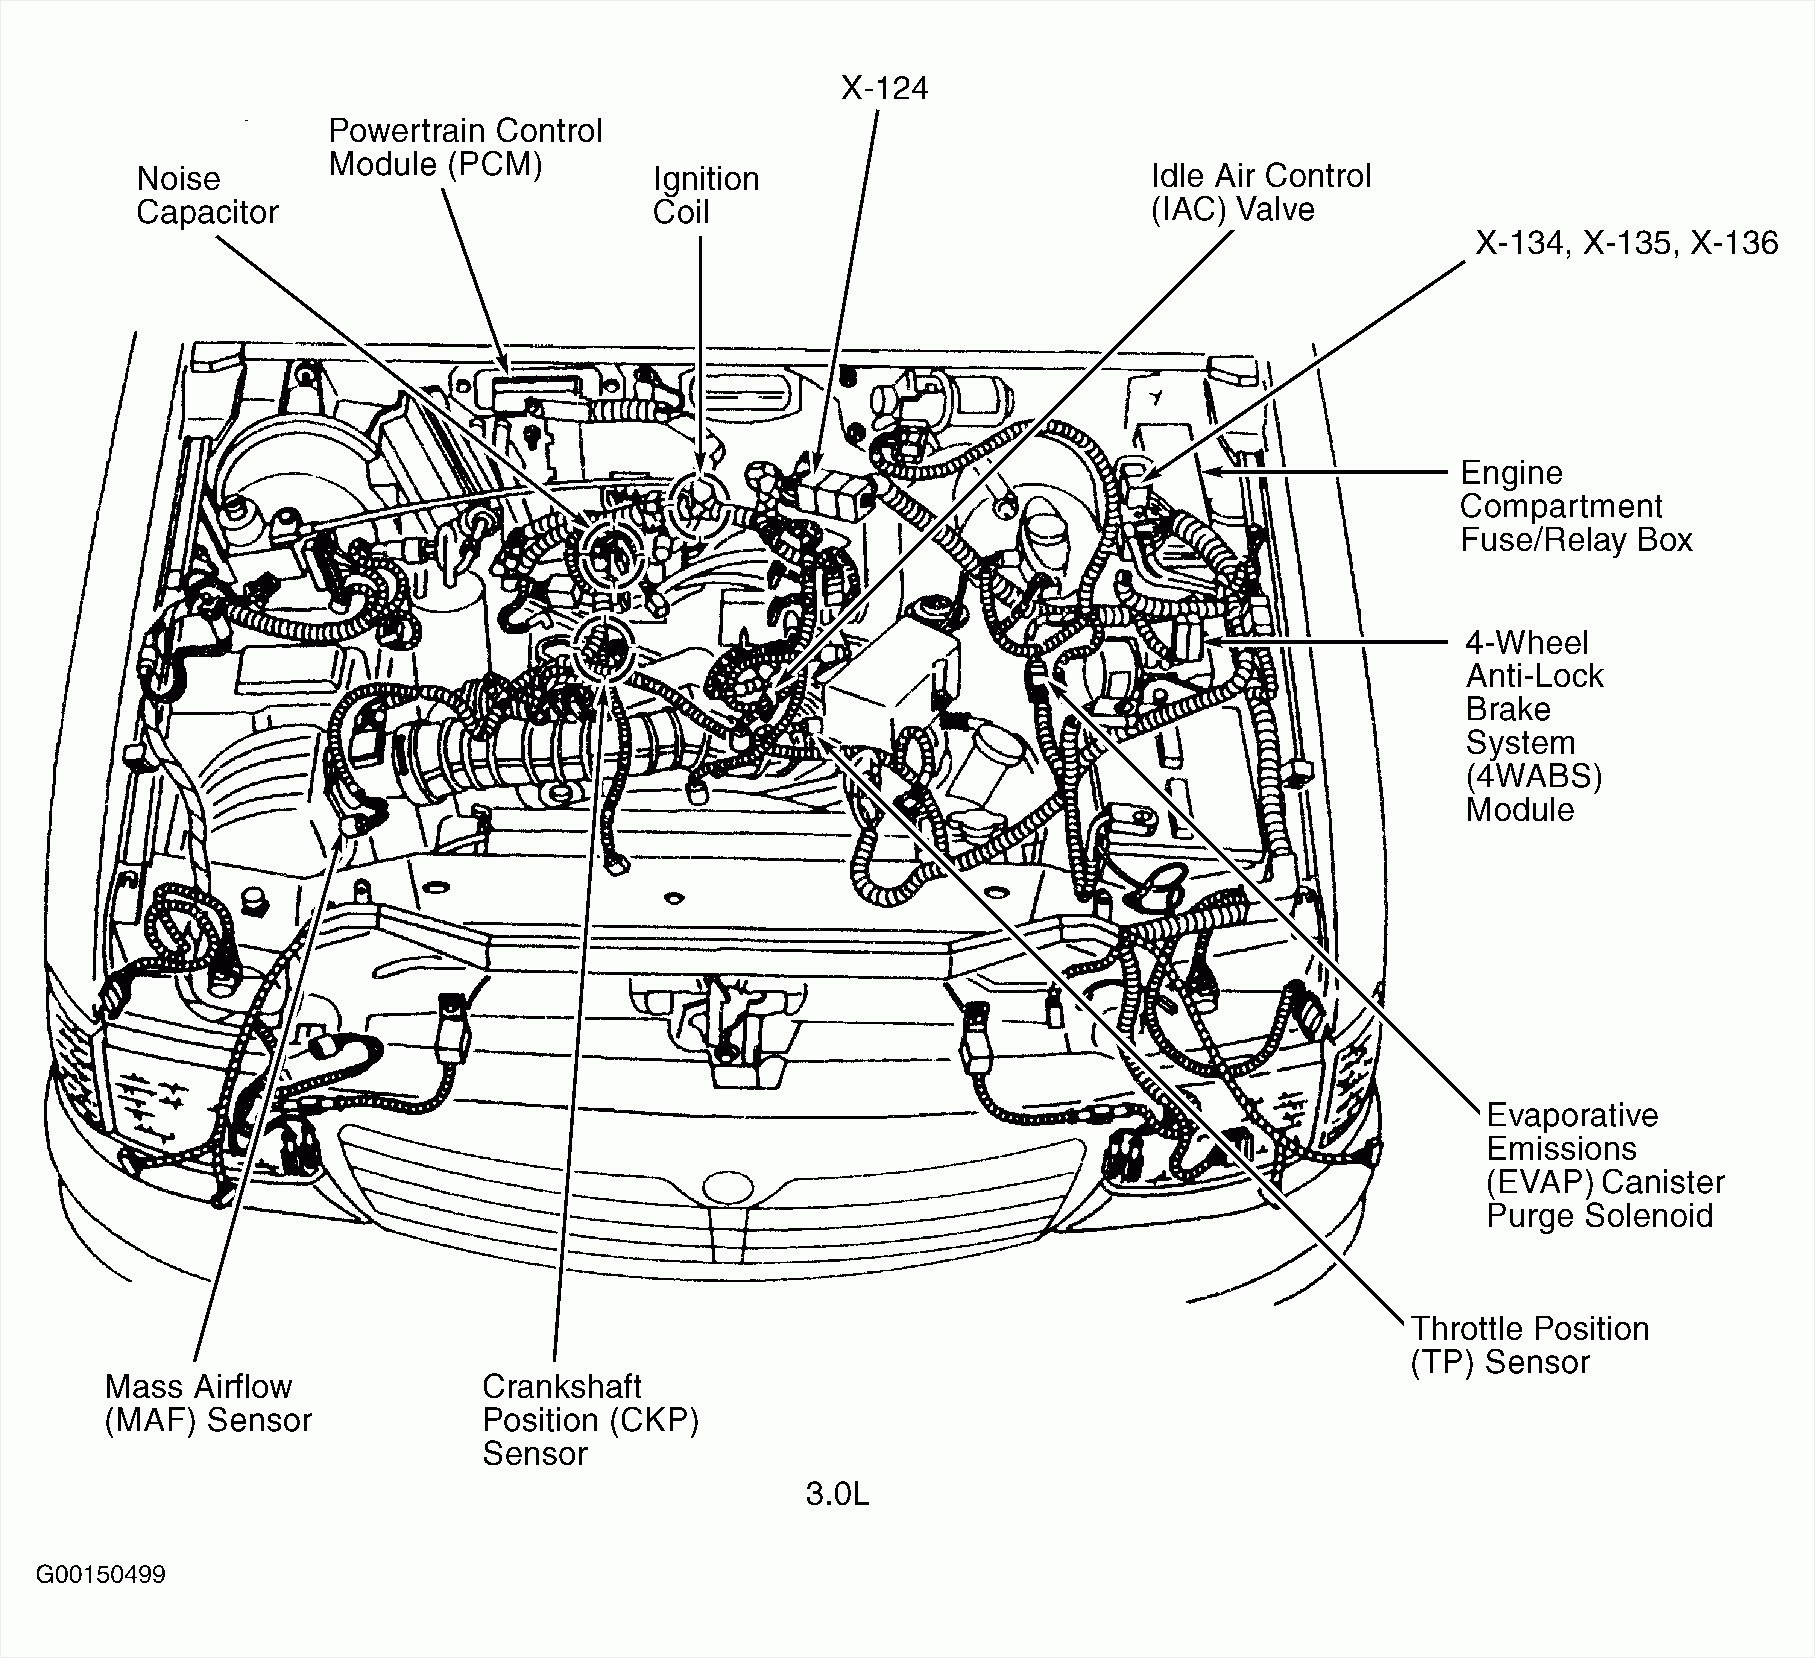 1992 toyota Camry Engine Diagram 92 toyota Truck Wiring Schematic Of 1992 toyota Camry Engine Diagram